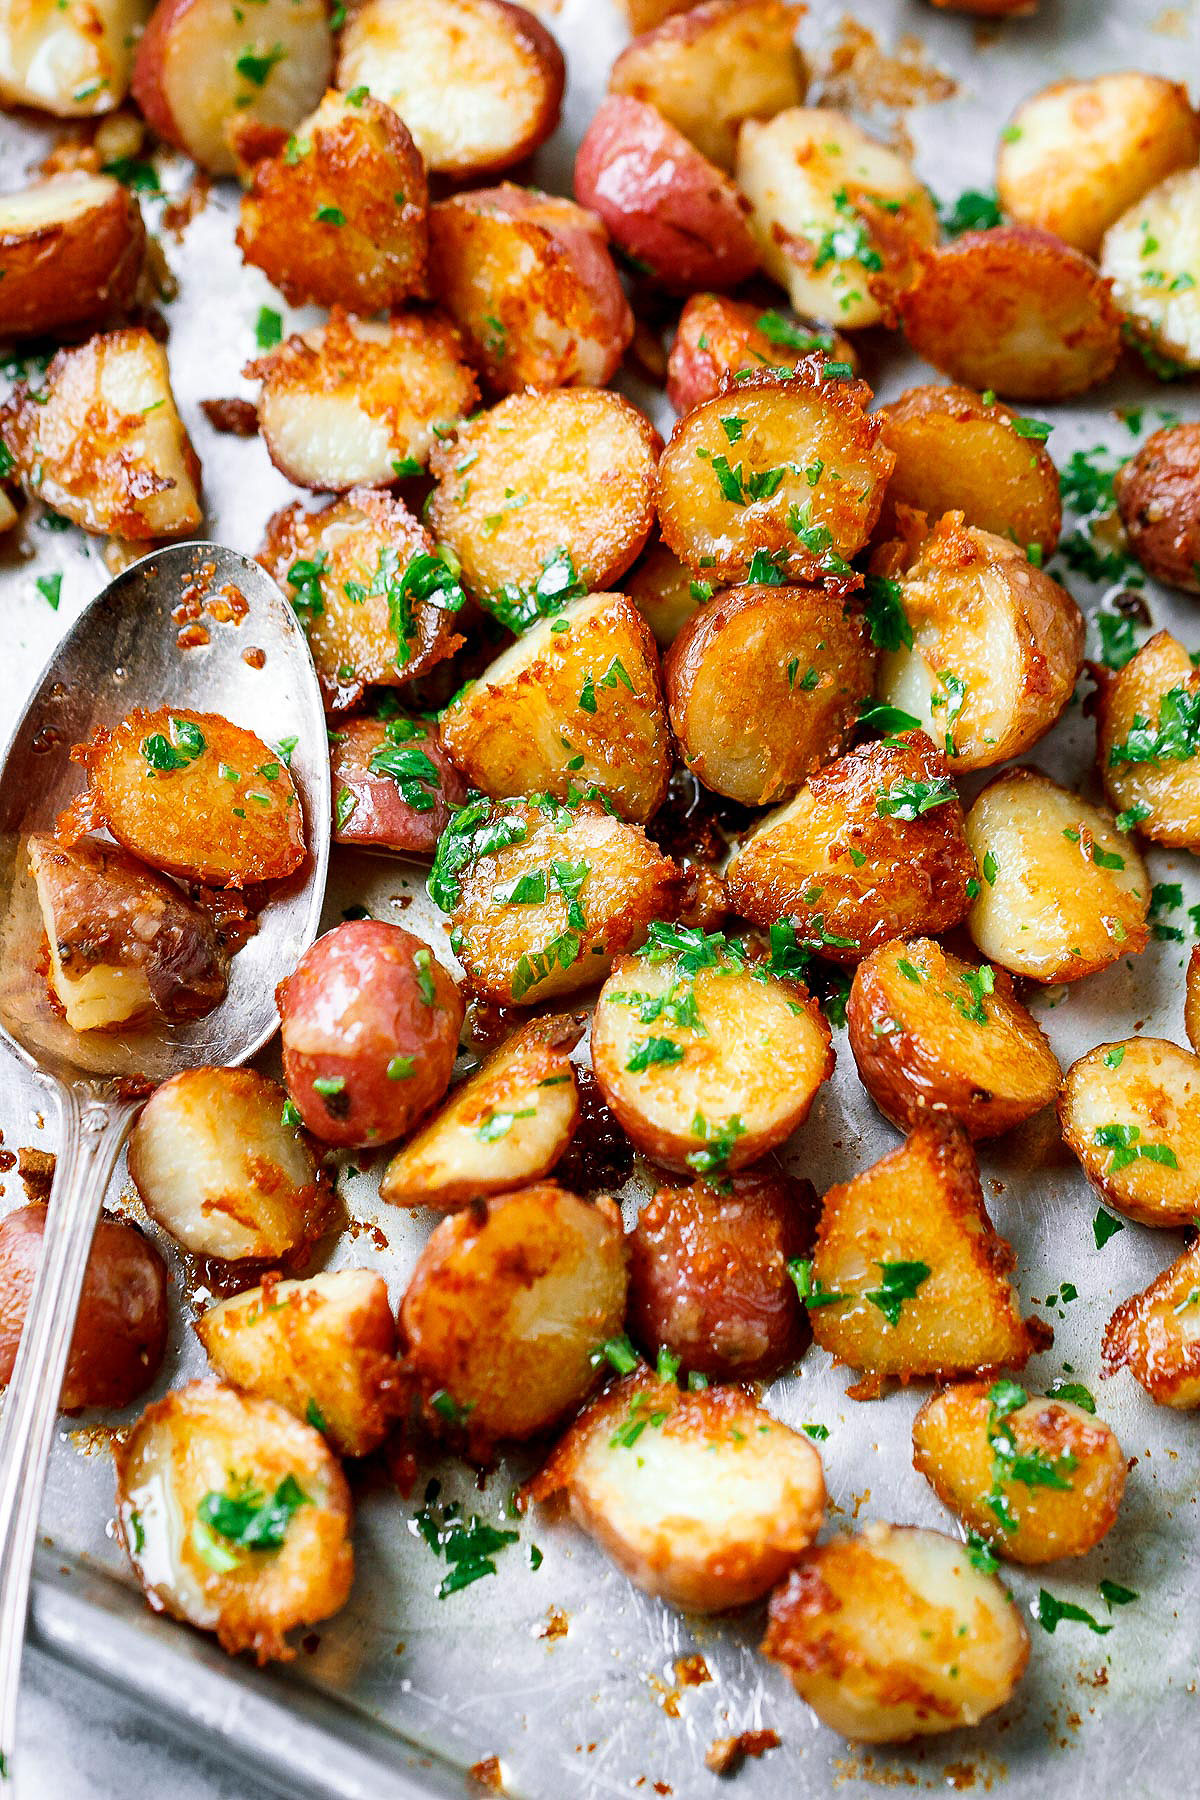 How to roast baby potatoes